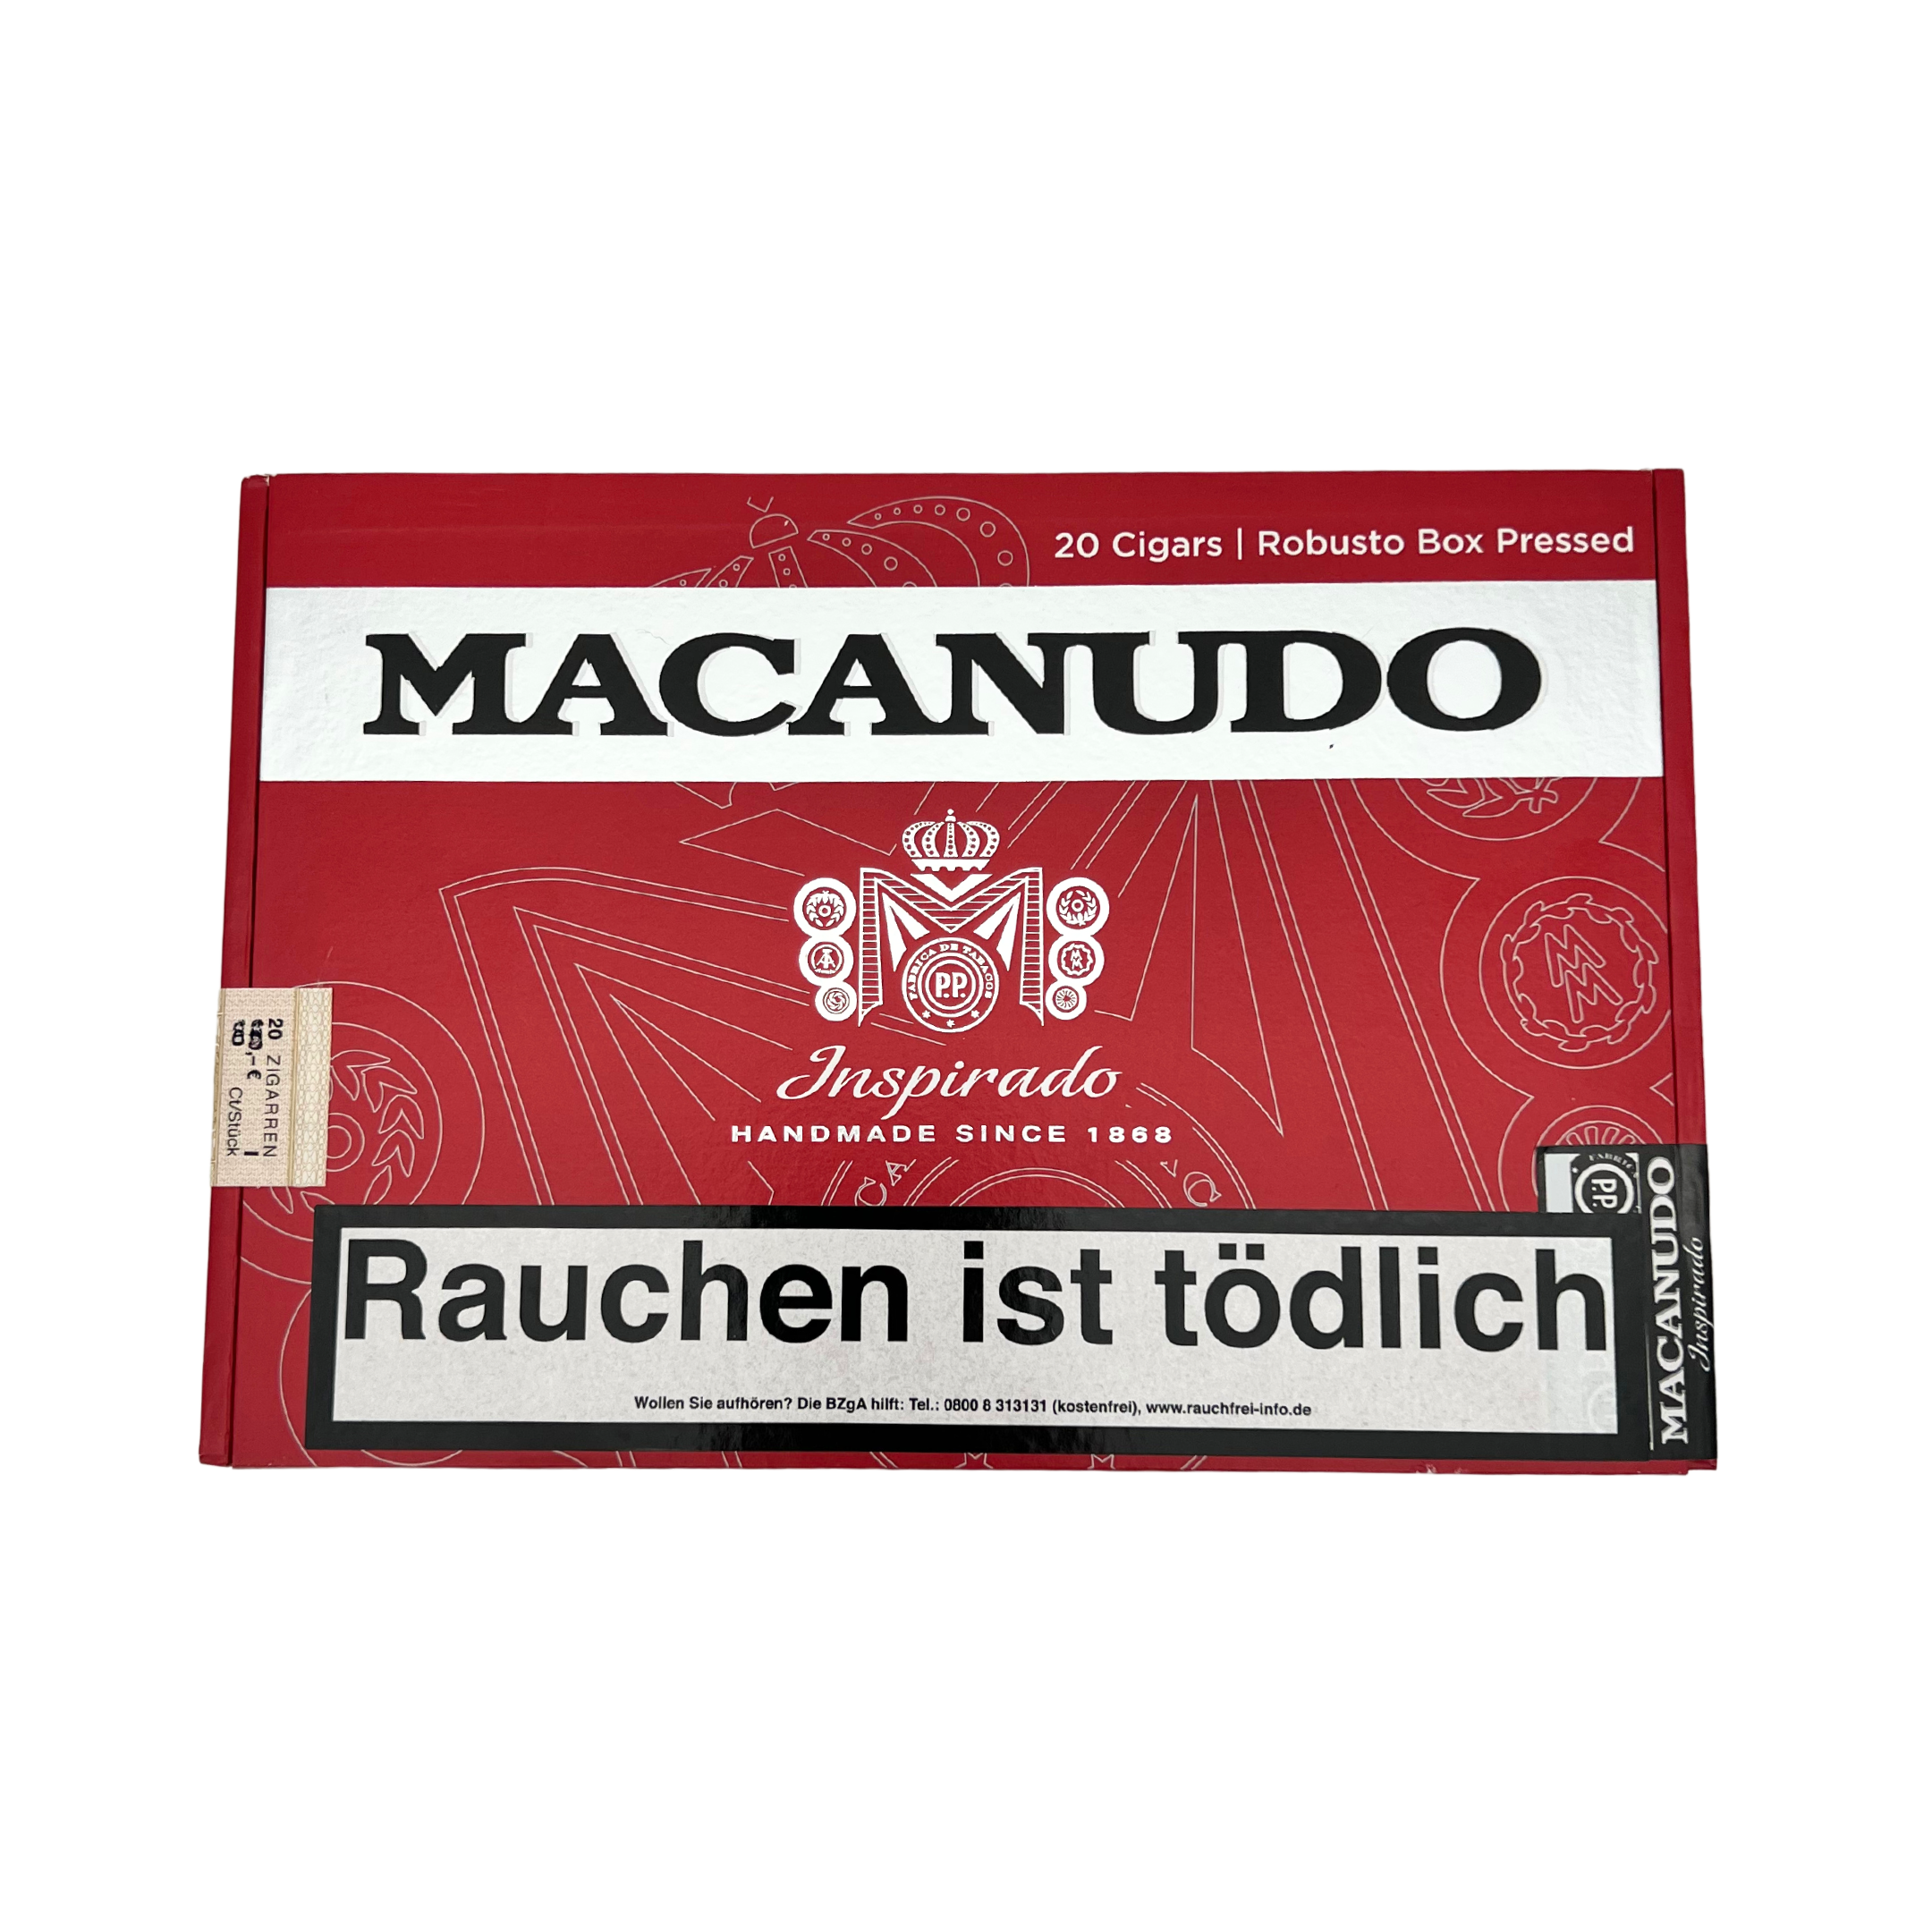 MACANUDO - Inspirado Red Robusto Box Pressed